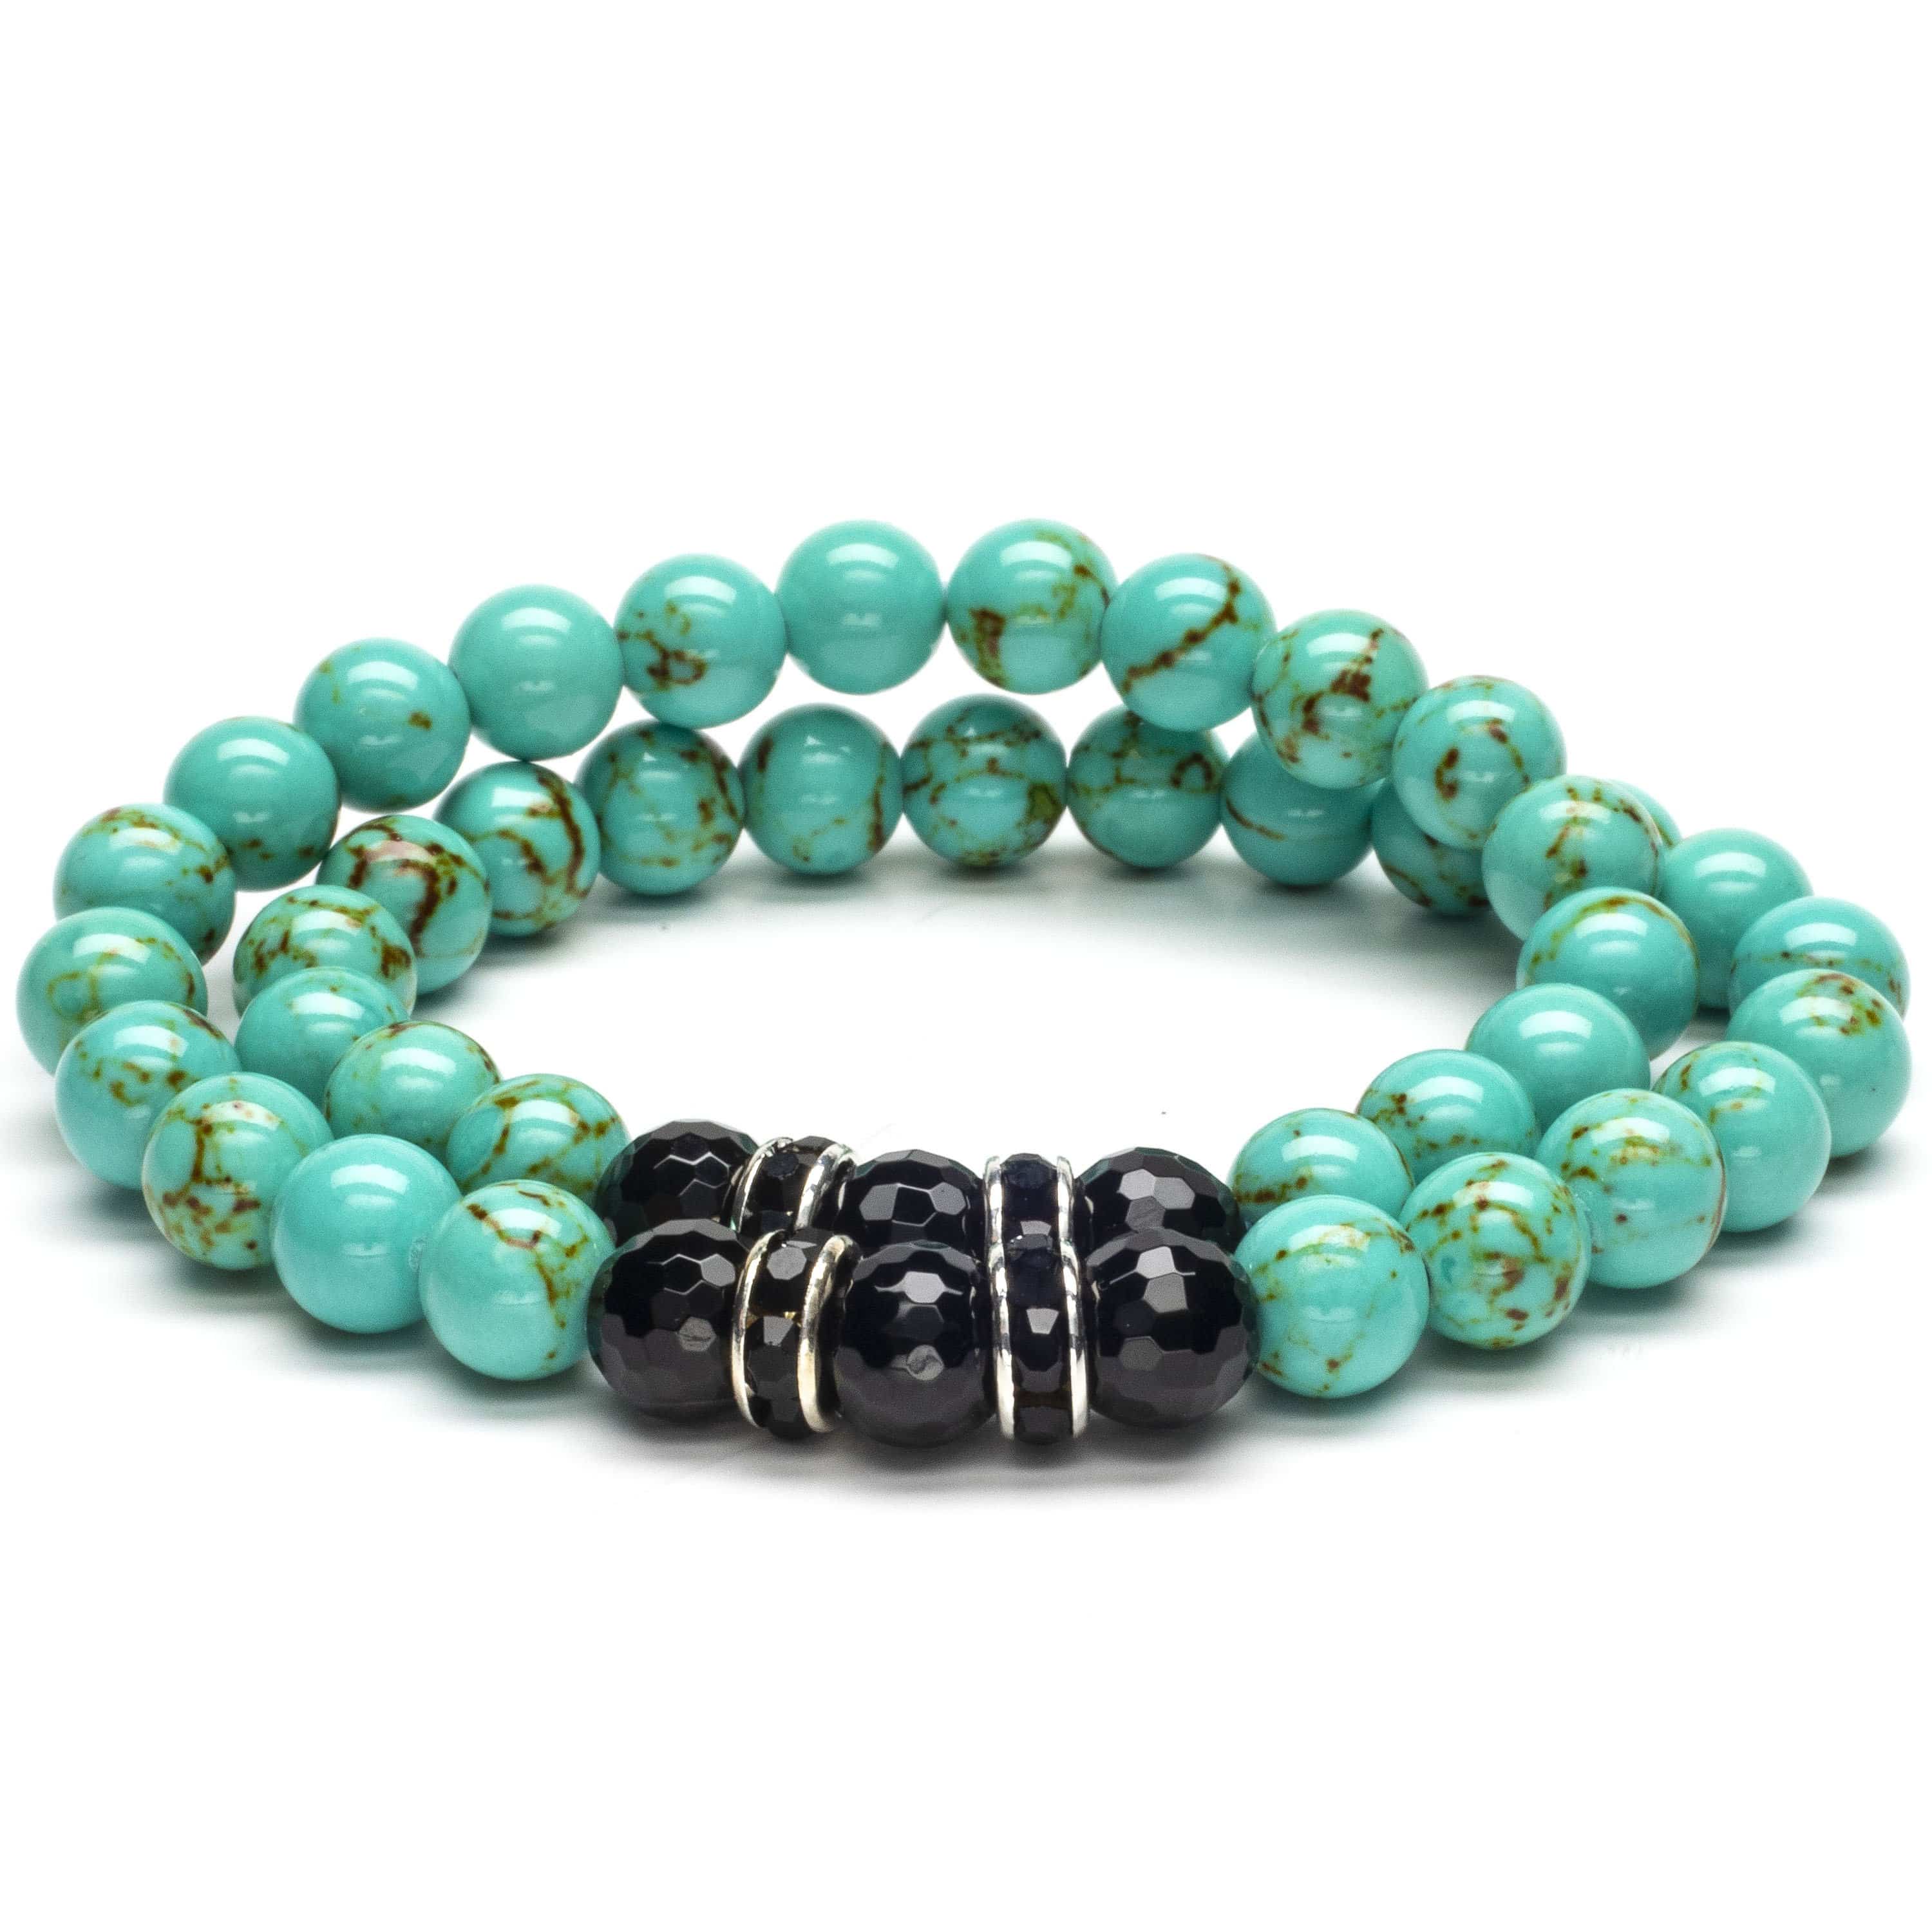 Kalifano Gemstone Bracelets Howlite Turquoise 8mm Beads with Black Agate and Black & Silver Accent Beads Double Wrap Elastic Gemstone Bracelet WHITE-BGI2-001